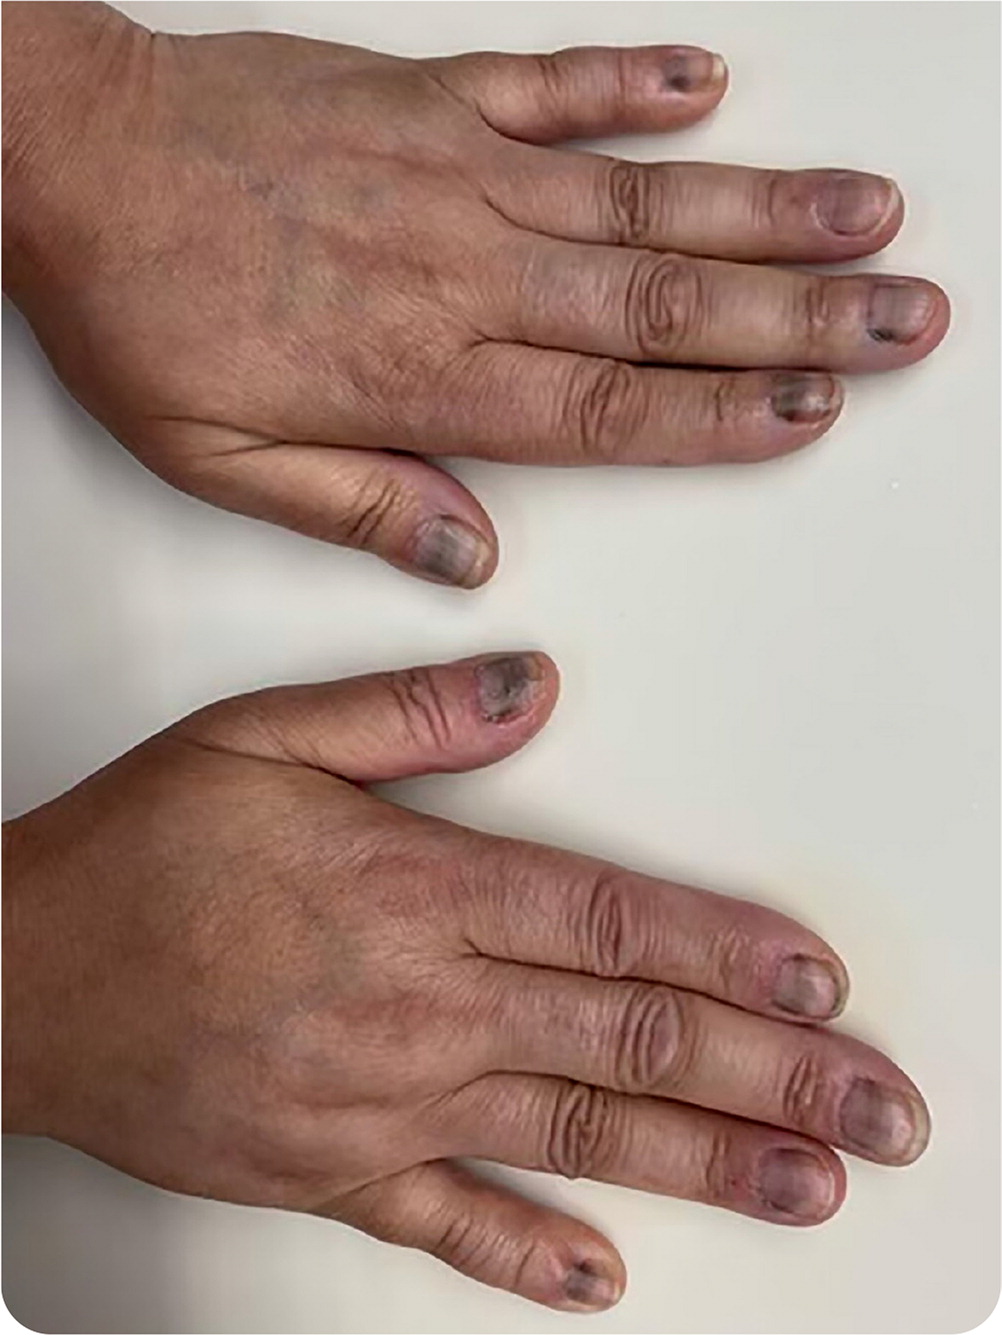 Fingers of a Woman Wearing a Black Nail Polish · Free Stock Photo